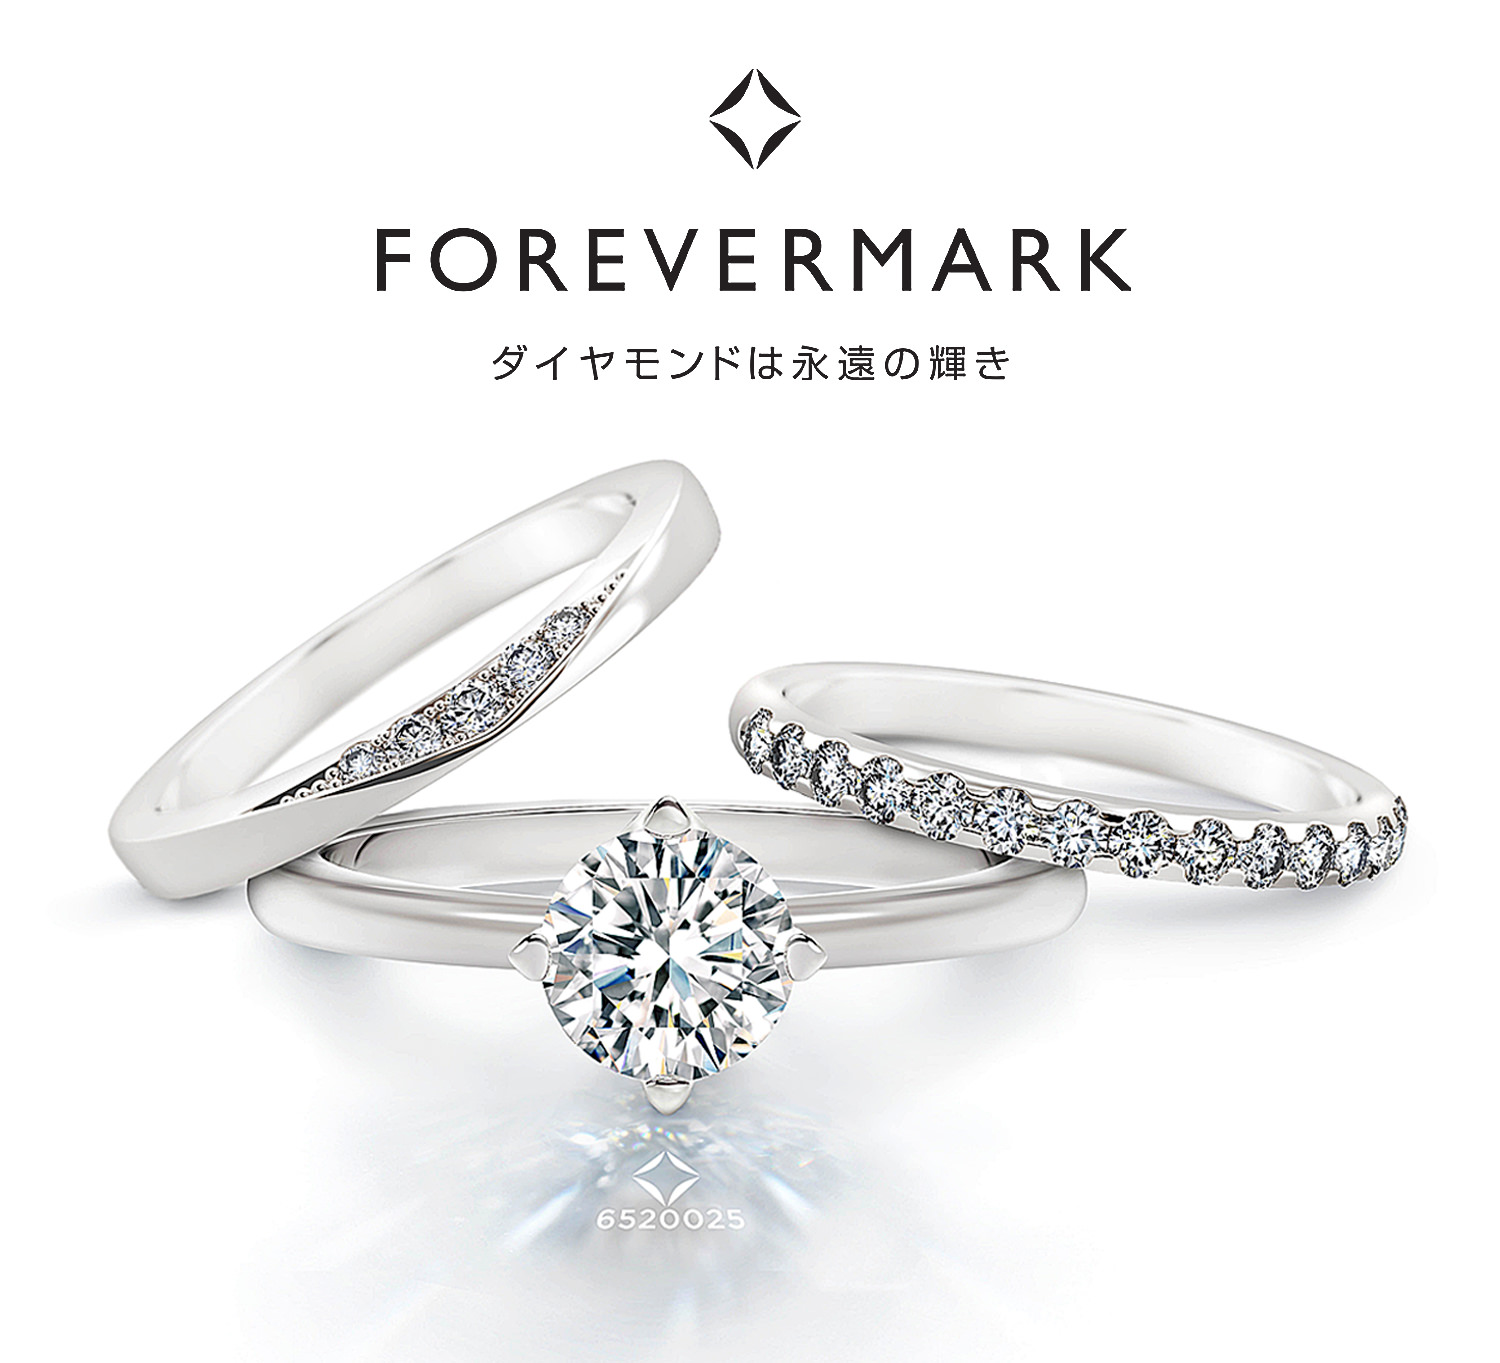 FOREVERMARKフォーエバーマークの婚約指輪と結婚指輪でエンゲージリングとマリッジリング